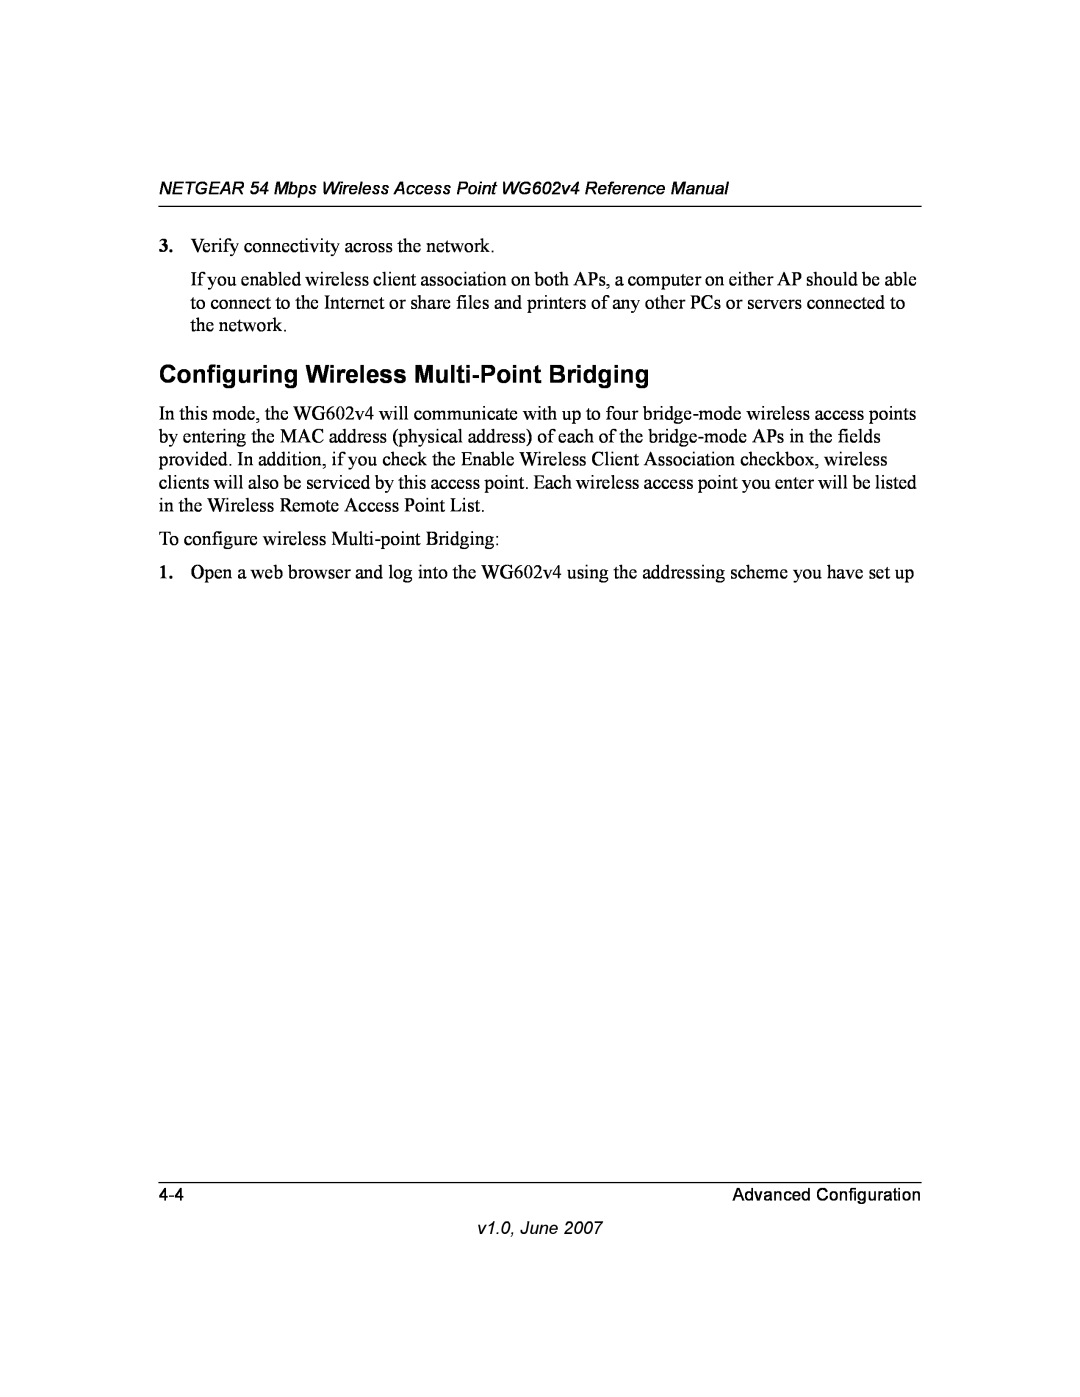 NETGEAR WG602V4 manual Configuring Wireless Multi-Point Bridging 